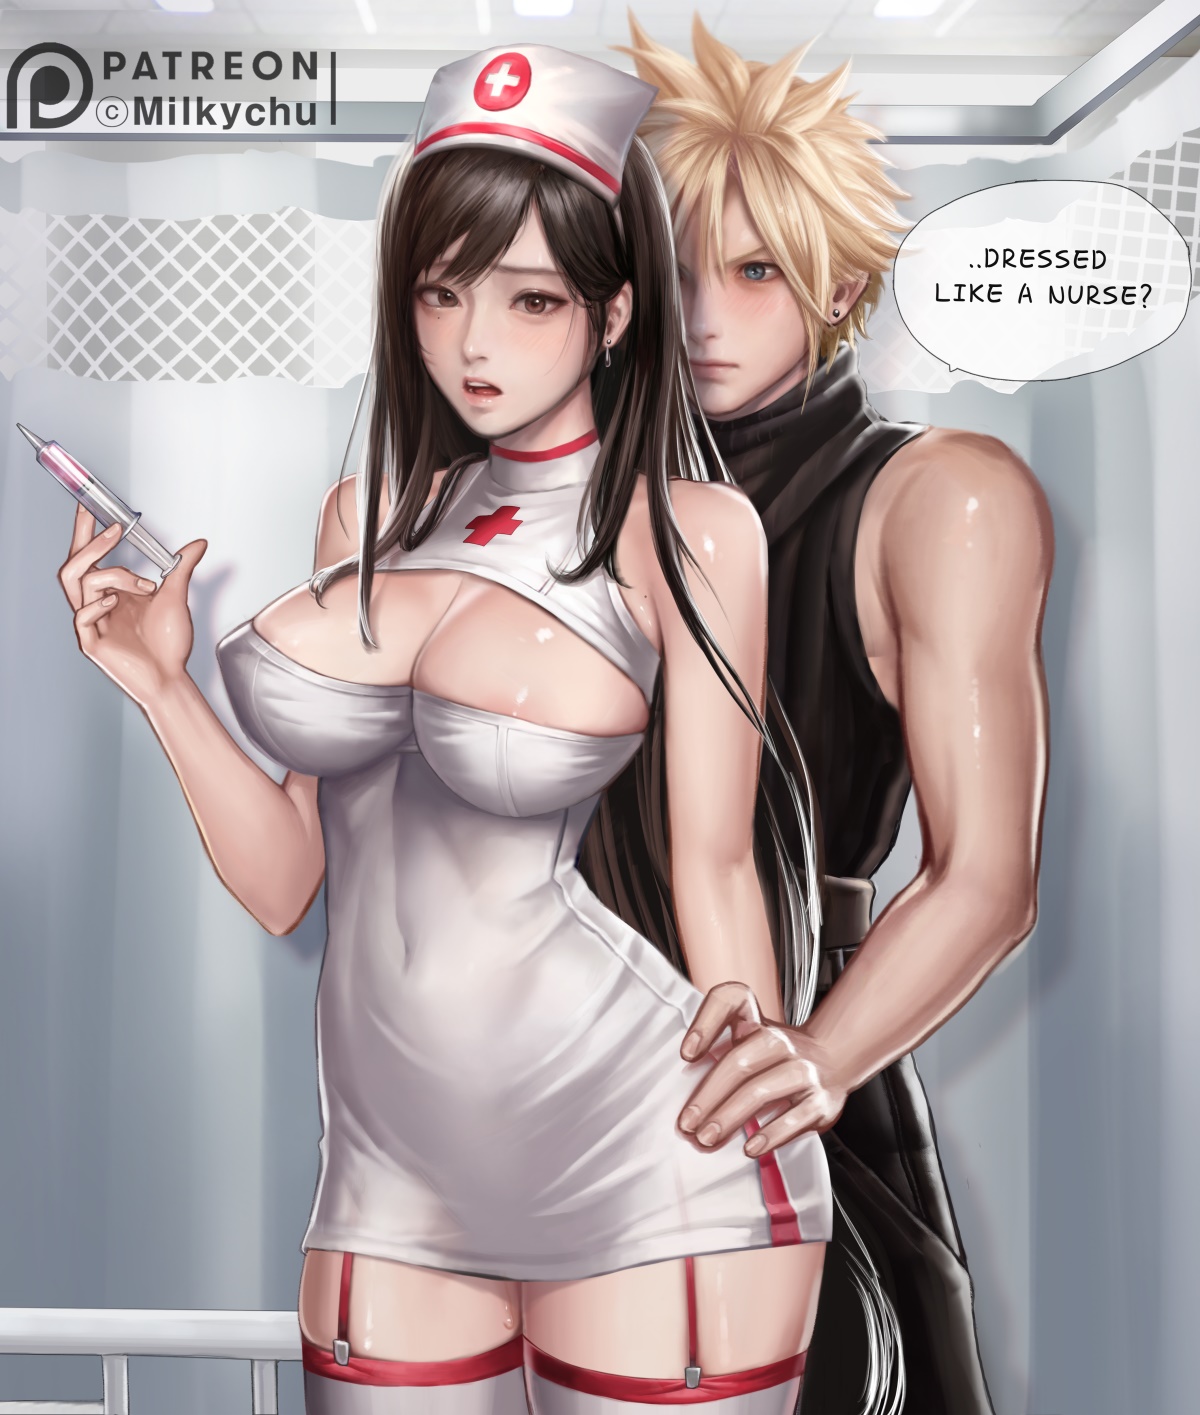 Anime 1200x1415 Milkychu big boobs Tifa Lockhart Final Fantasy nurse outfit women men